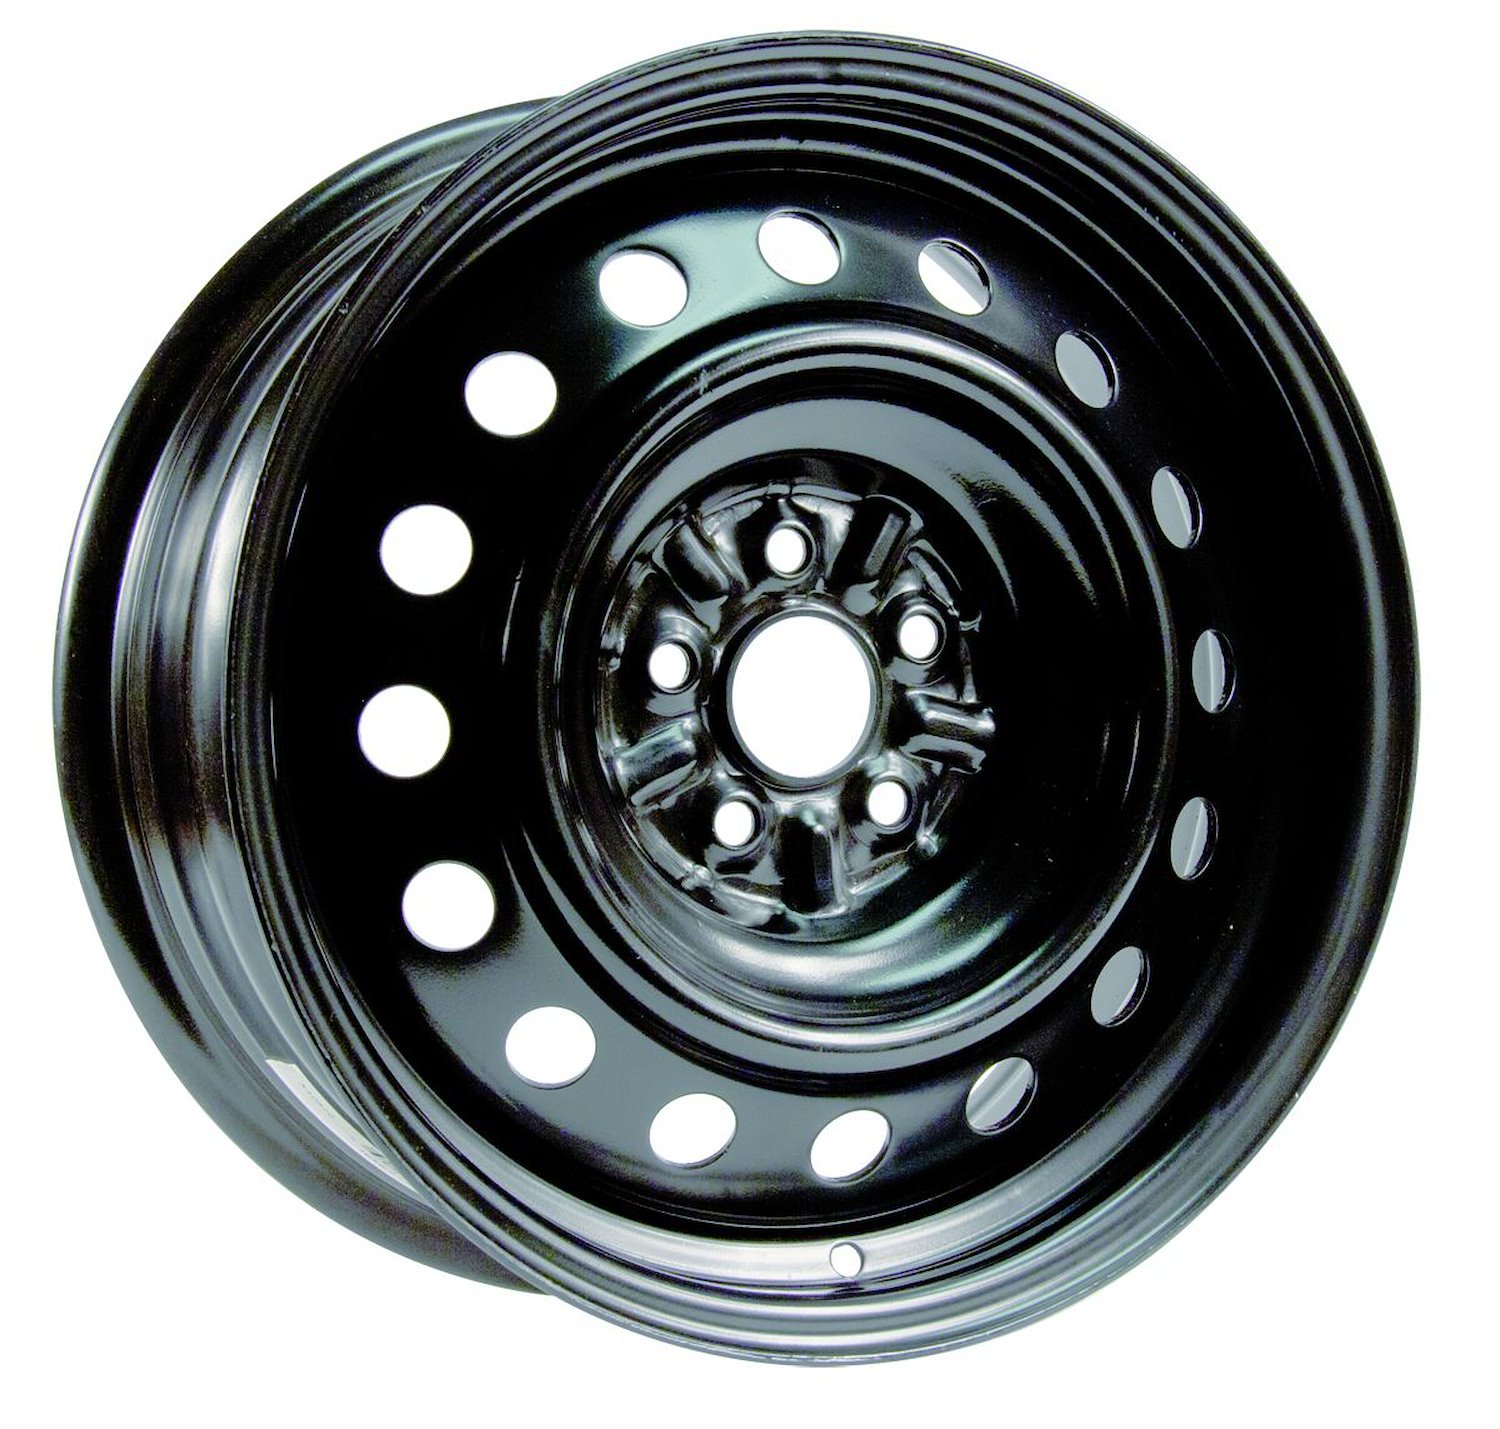 X40876 Steel Wheel [Size: 16" x 6.50"] Black Finish